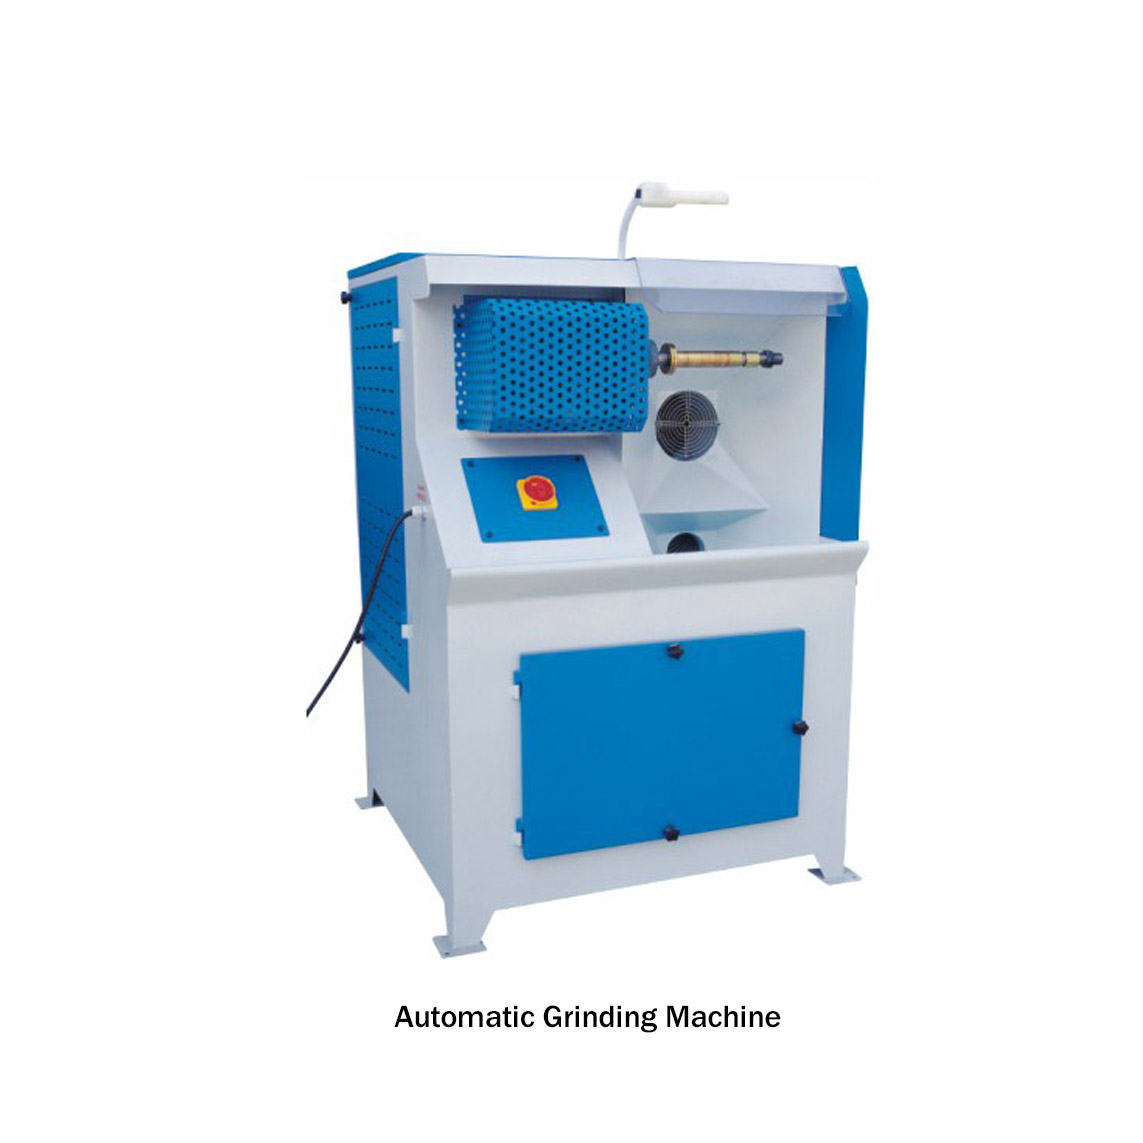 Automatic Grinding Machine